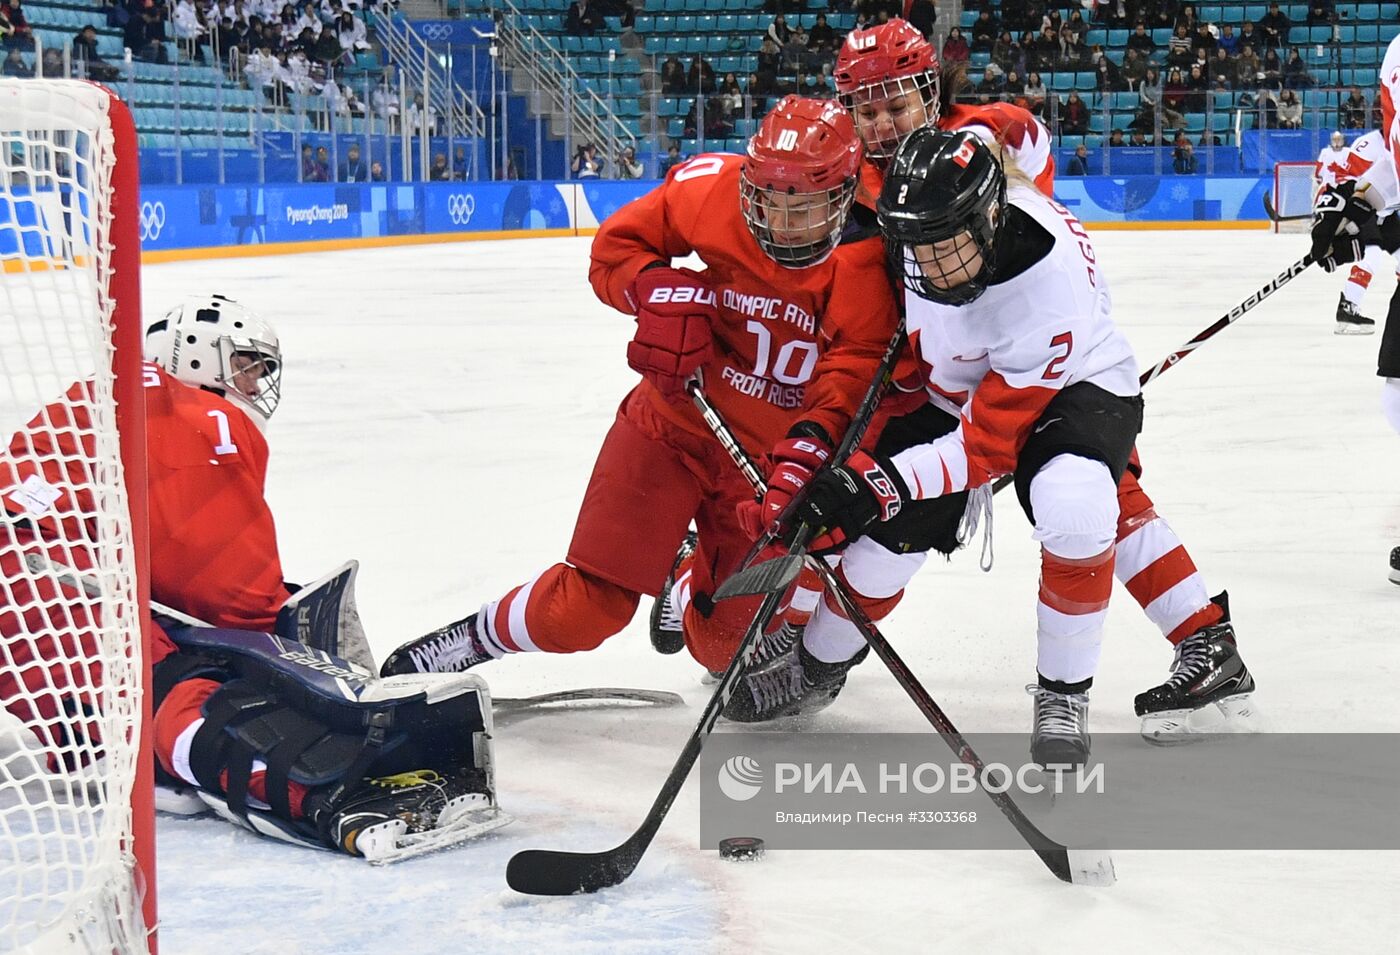 Олимпиада 2018. Хоккей. Женщины. Матч Канада - Россия